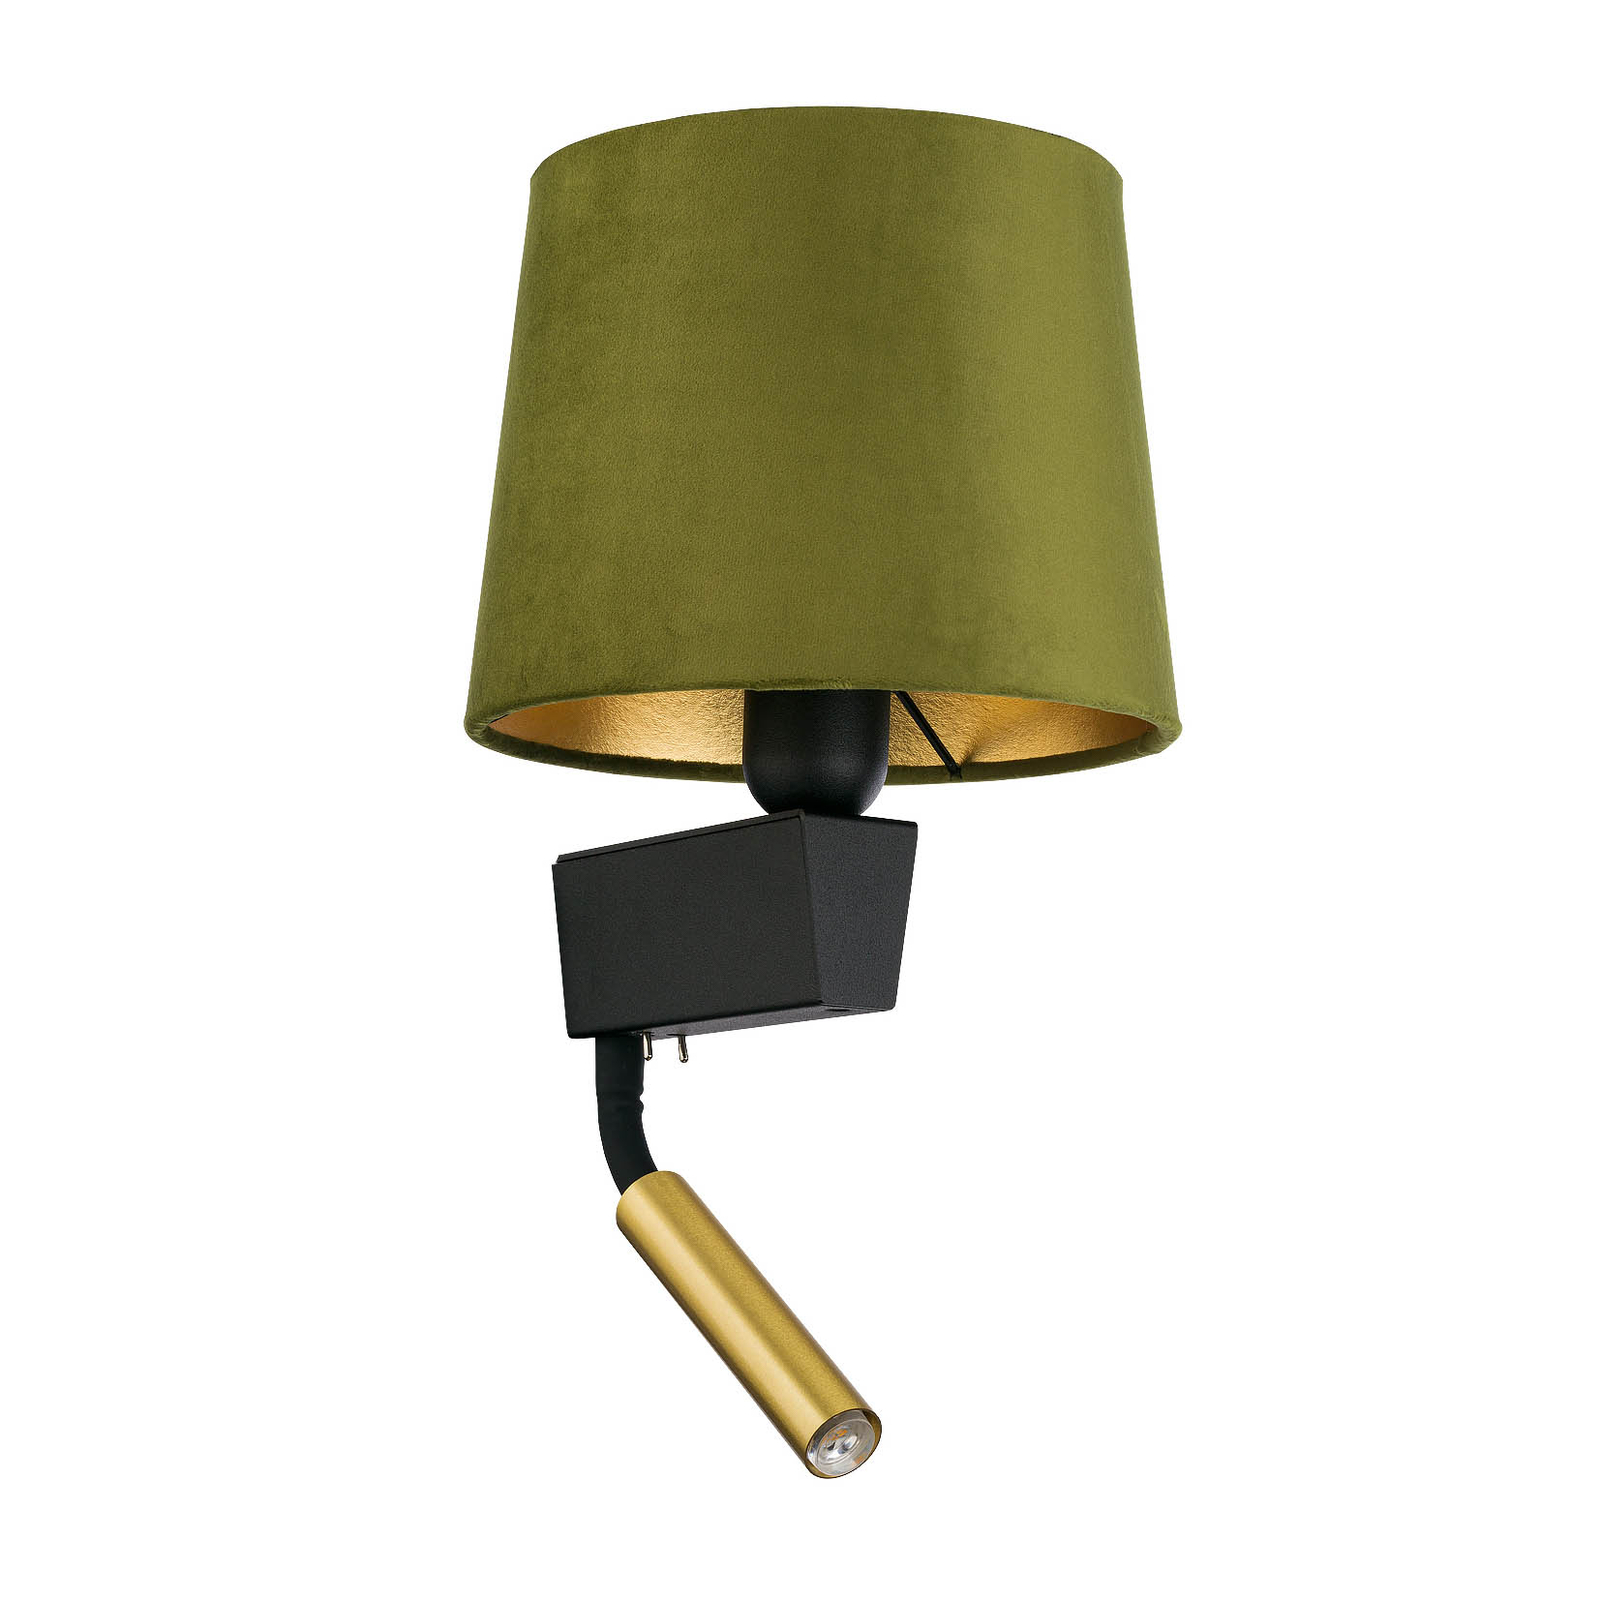 Chillin wandlamp met leeslampje, groen/goud